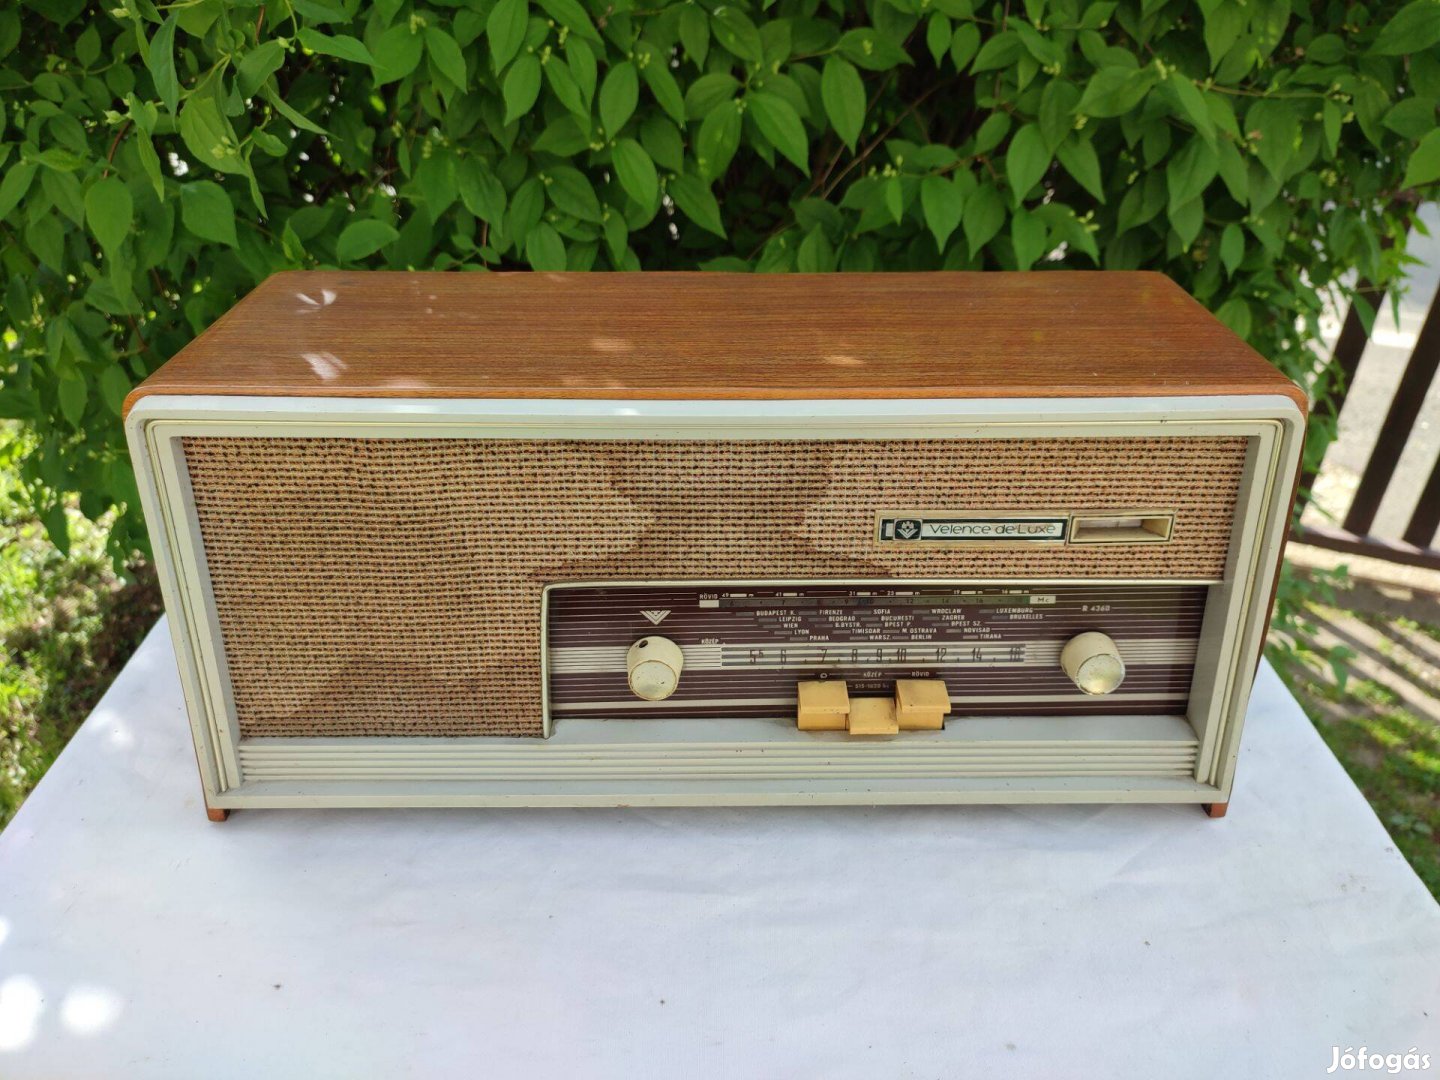 Videoton R 4360 Velence de Luxe régi rádió